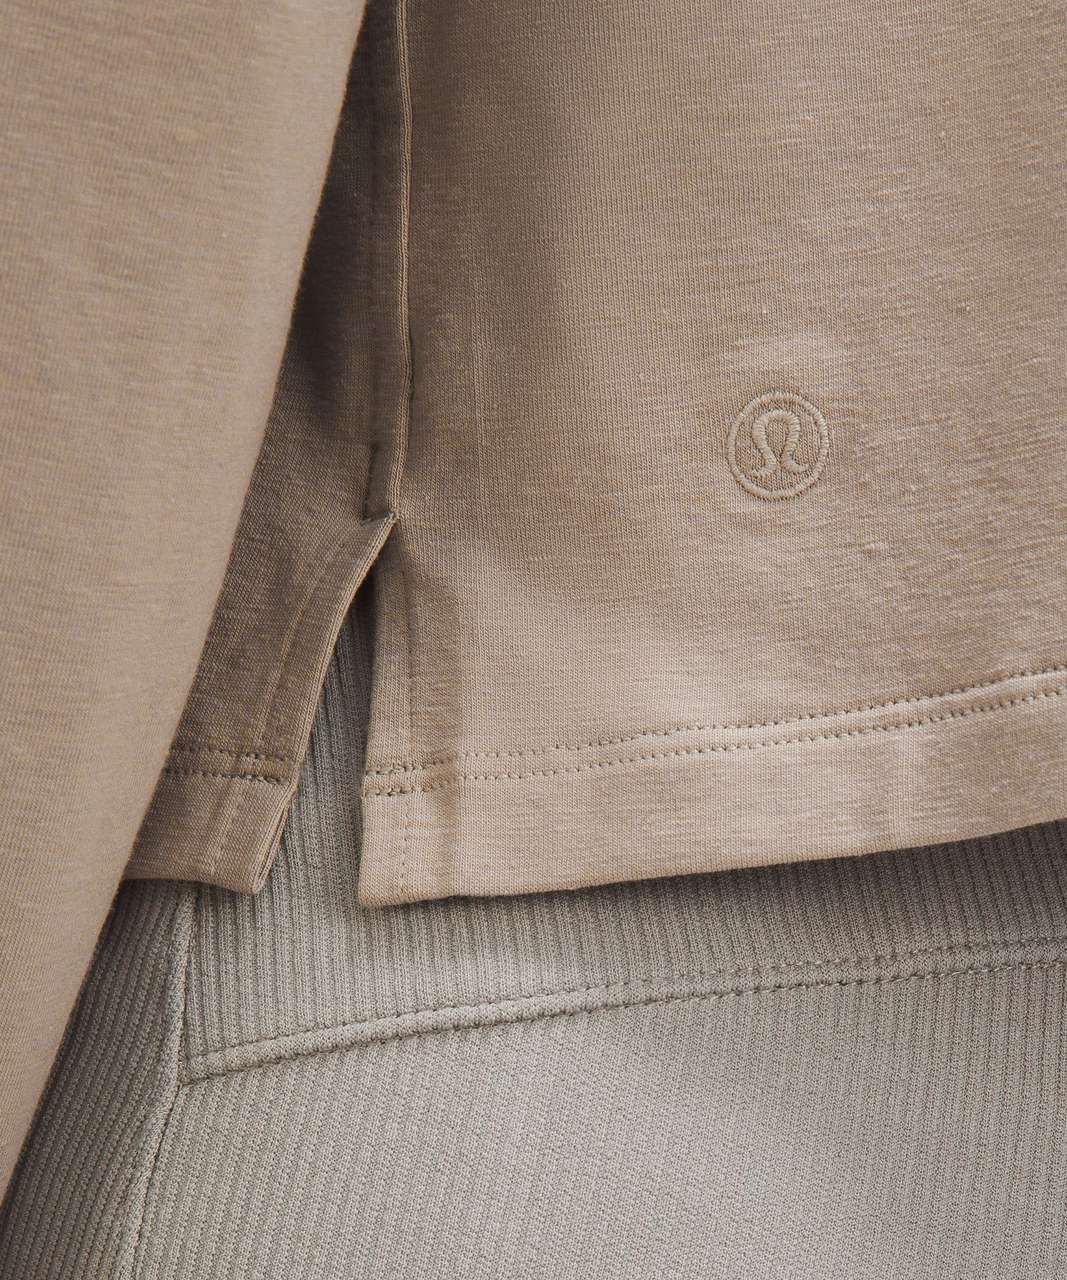 Lululemon Classic-Fit Cotton-Blend Mockneck Long-Sleeve Shirt - Riverstone